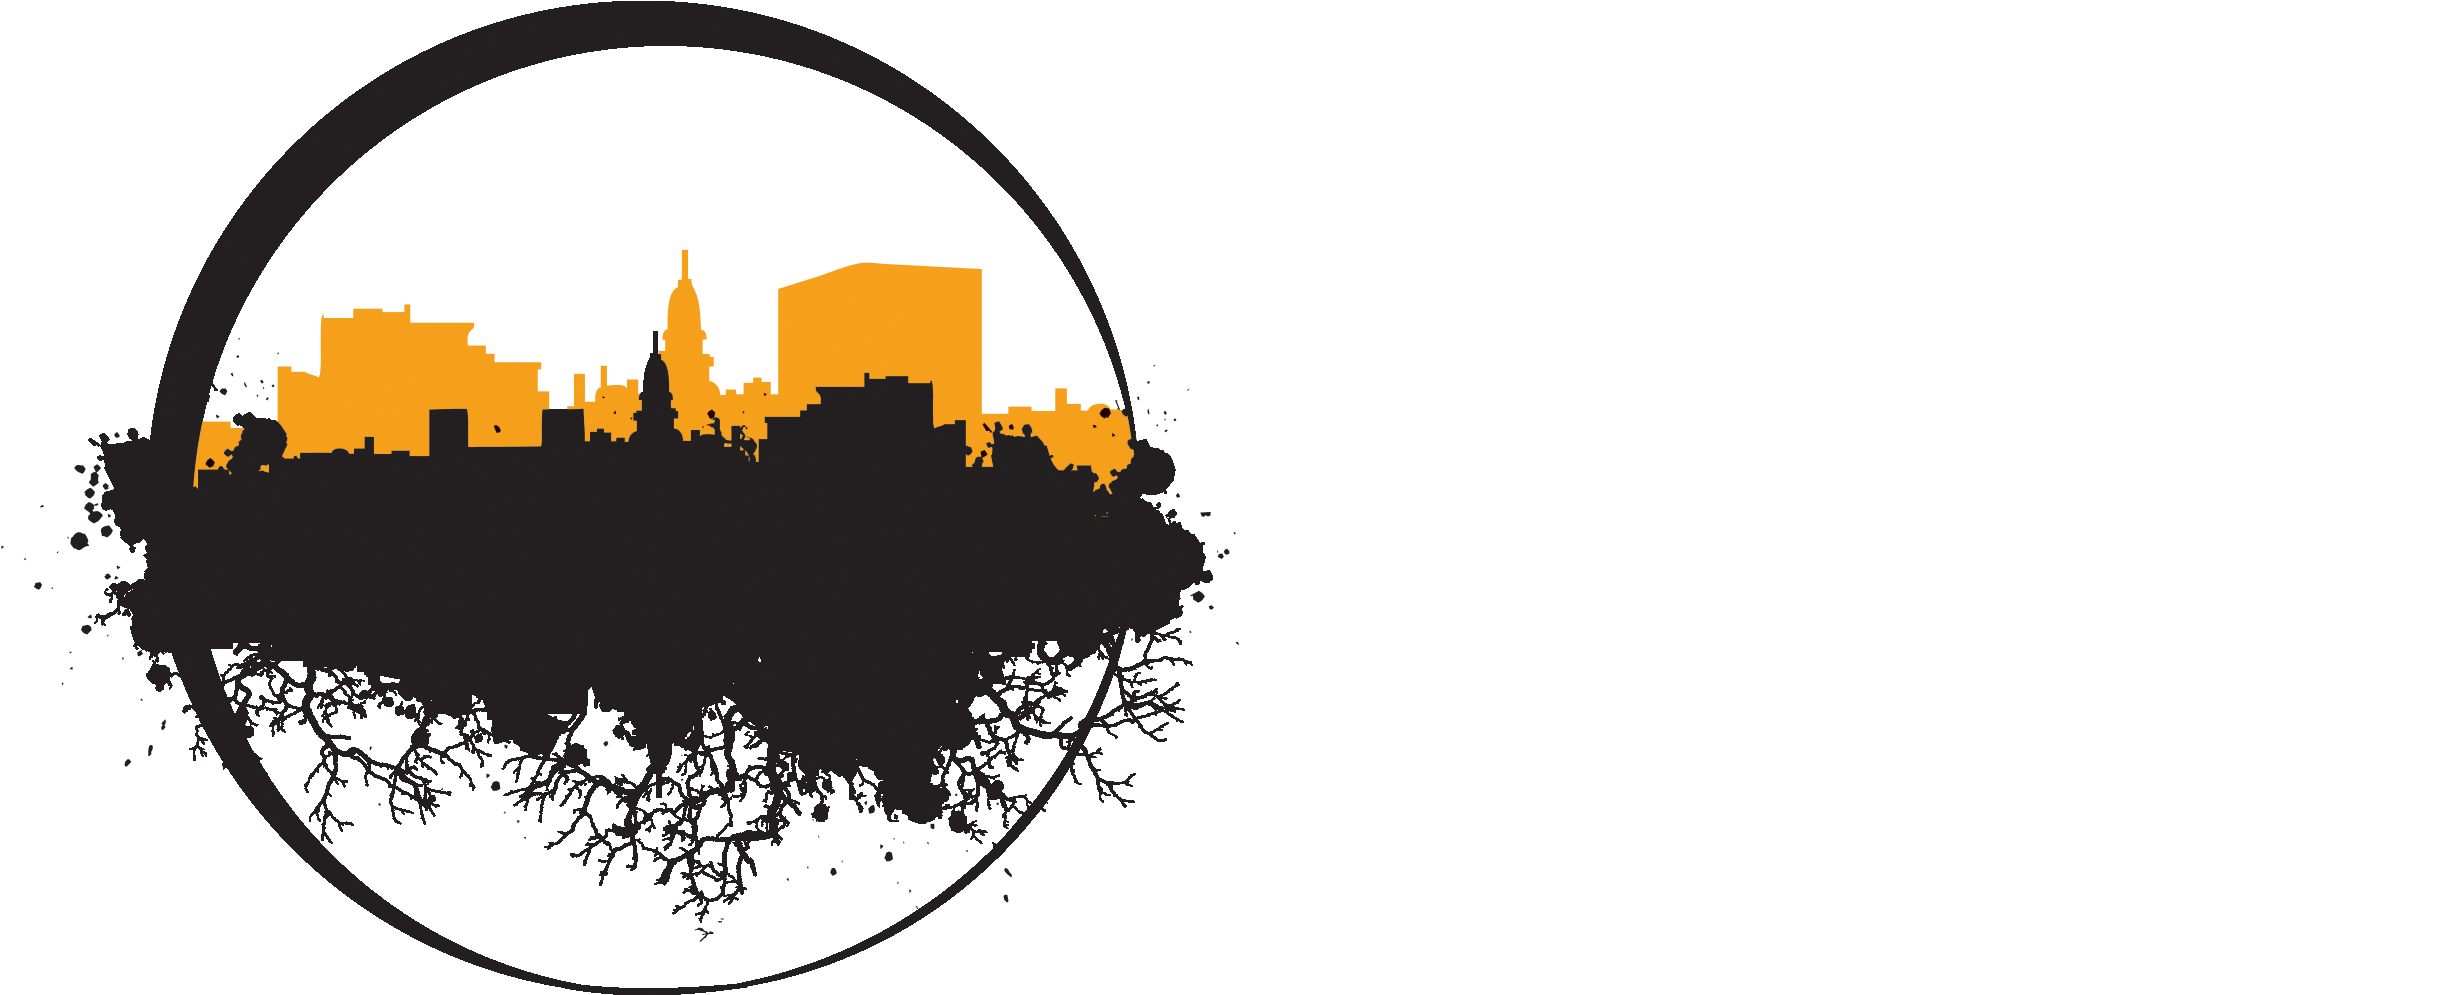 City Of God Church (2502x994)